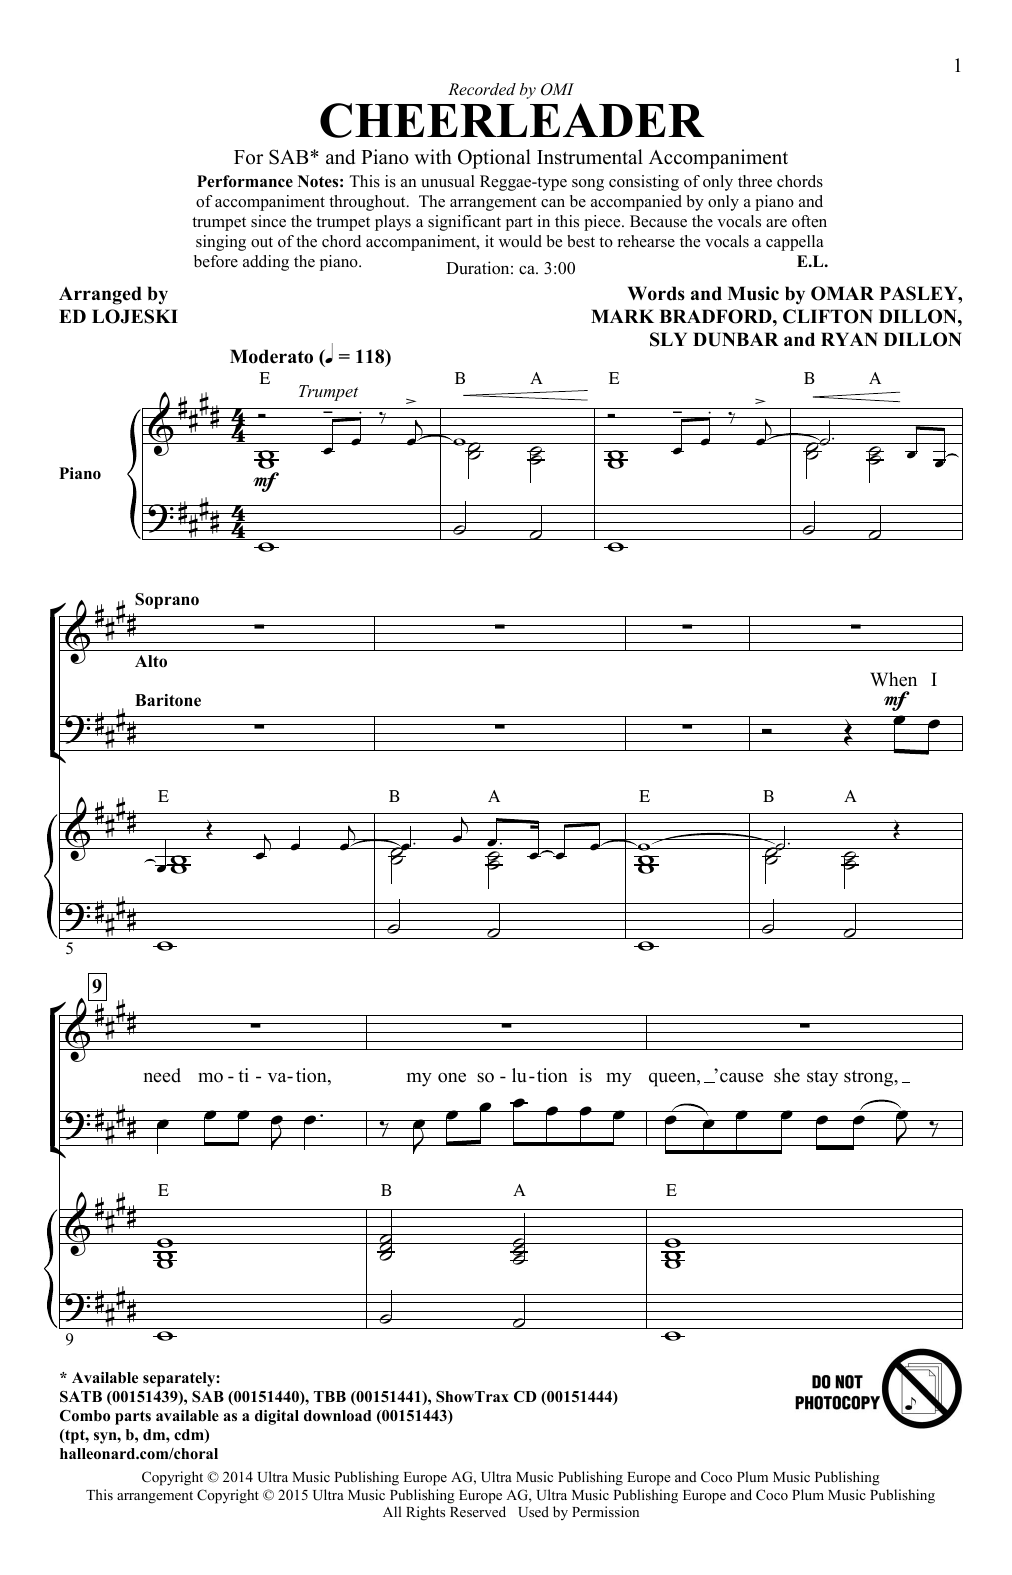 Omi Cheerleader (arr. Ed Lojeski) sheet music notes and chords arranged for TBB Choir